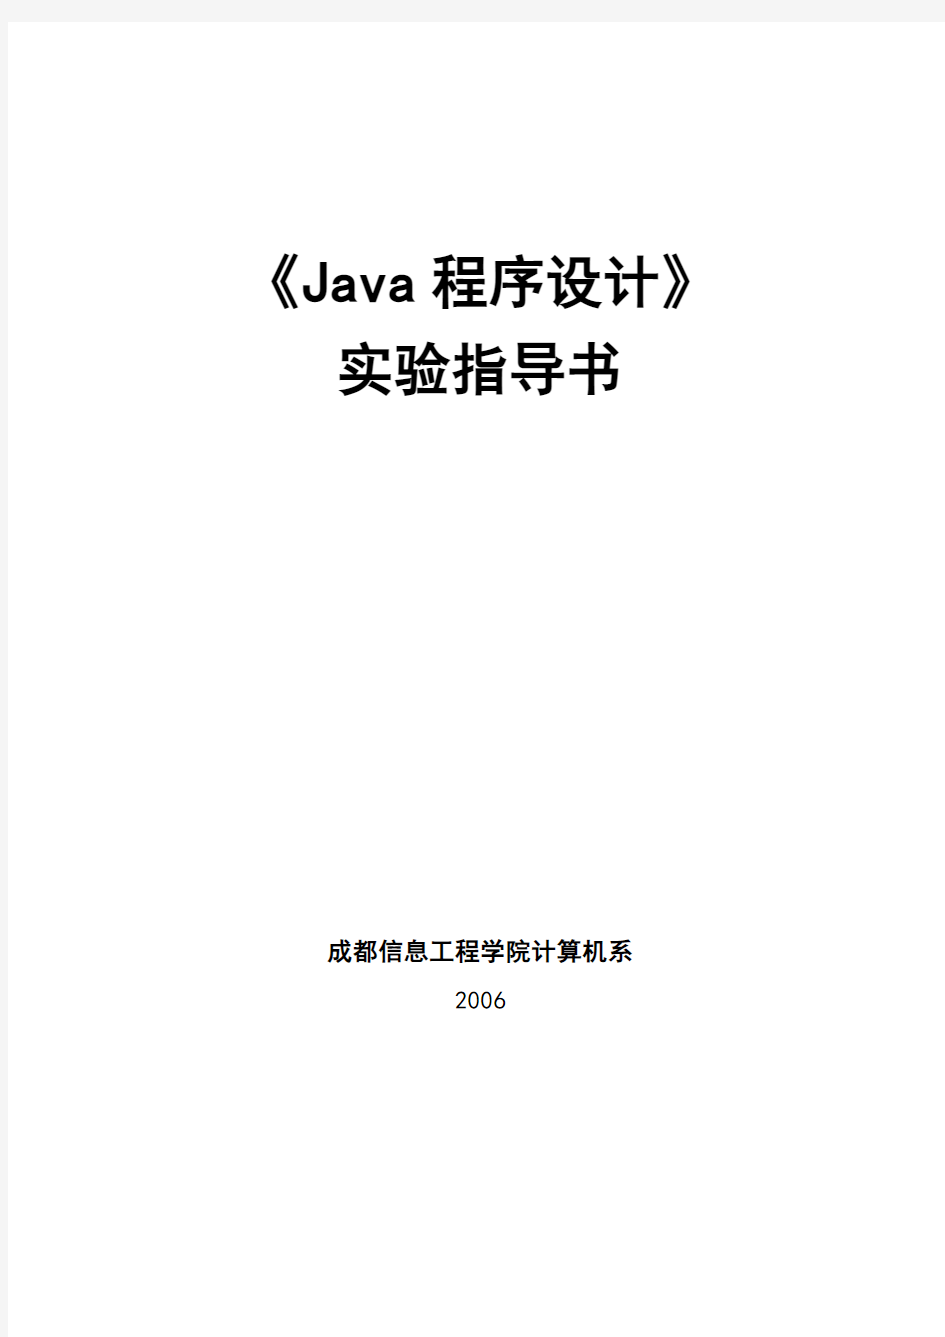 Java实验指导书